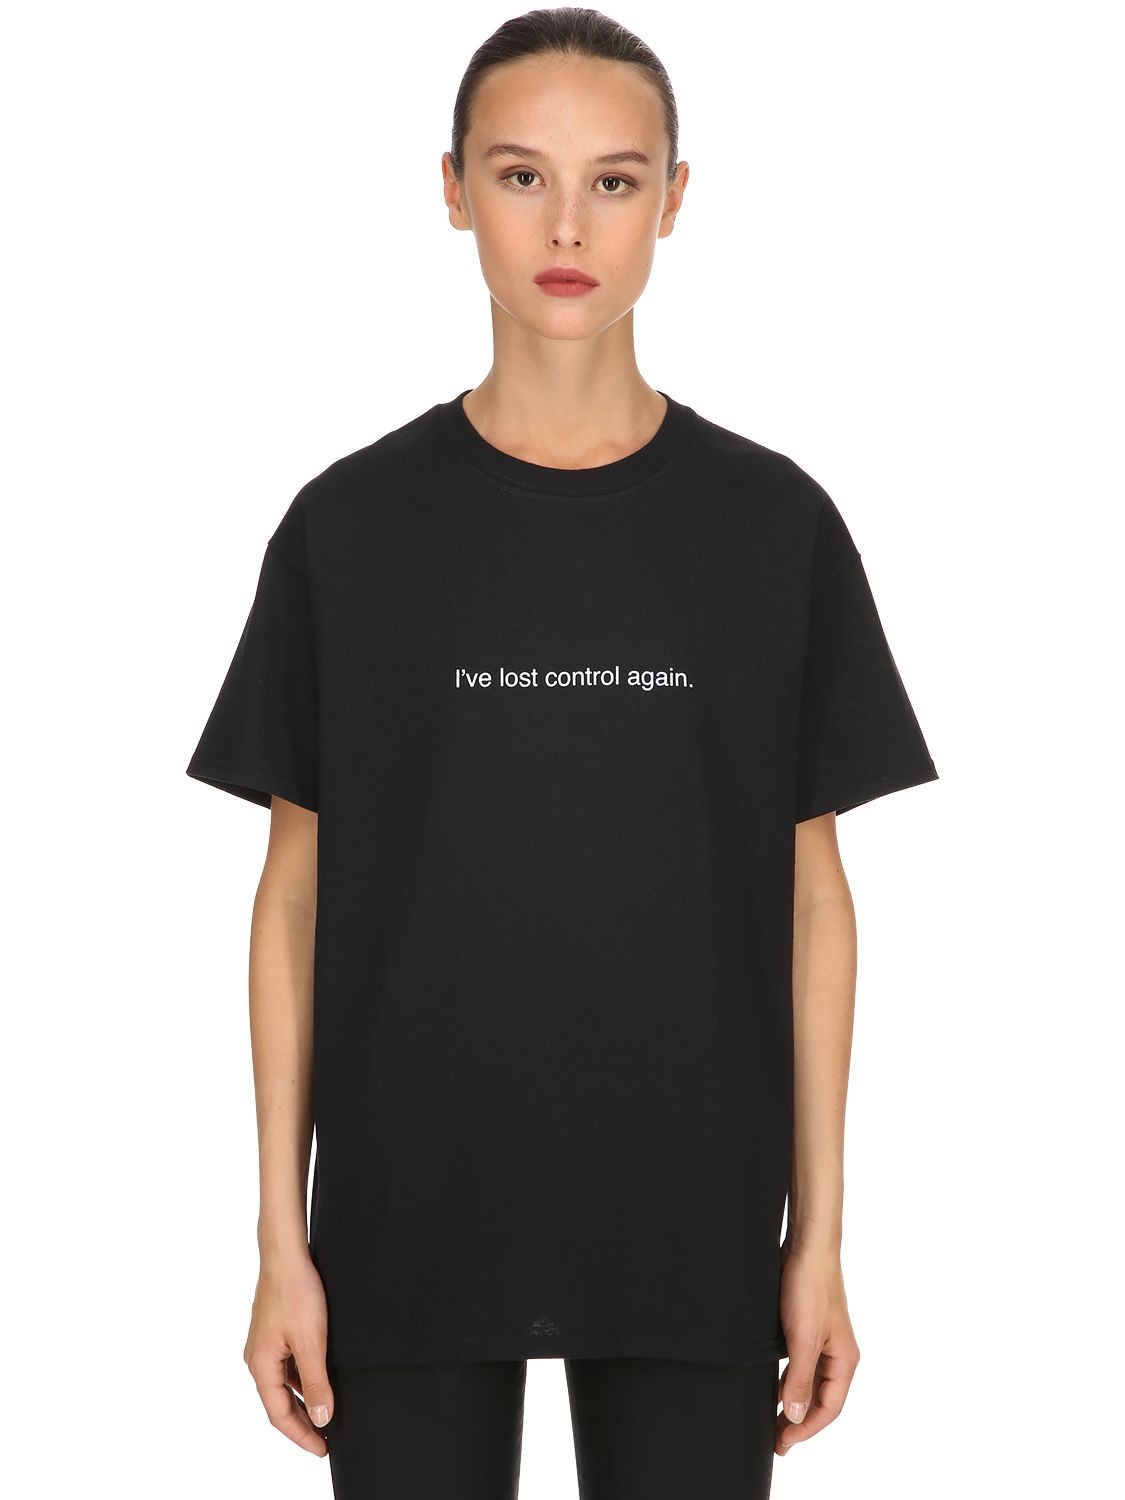 FAMT - FUCK ART MAKE TEES "I'VE LOST CONTROL AGAIN"T恤,68IWIN007-QKXBQ0S1